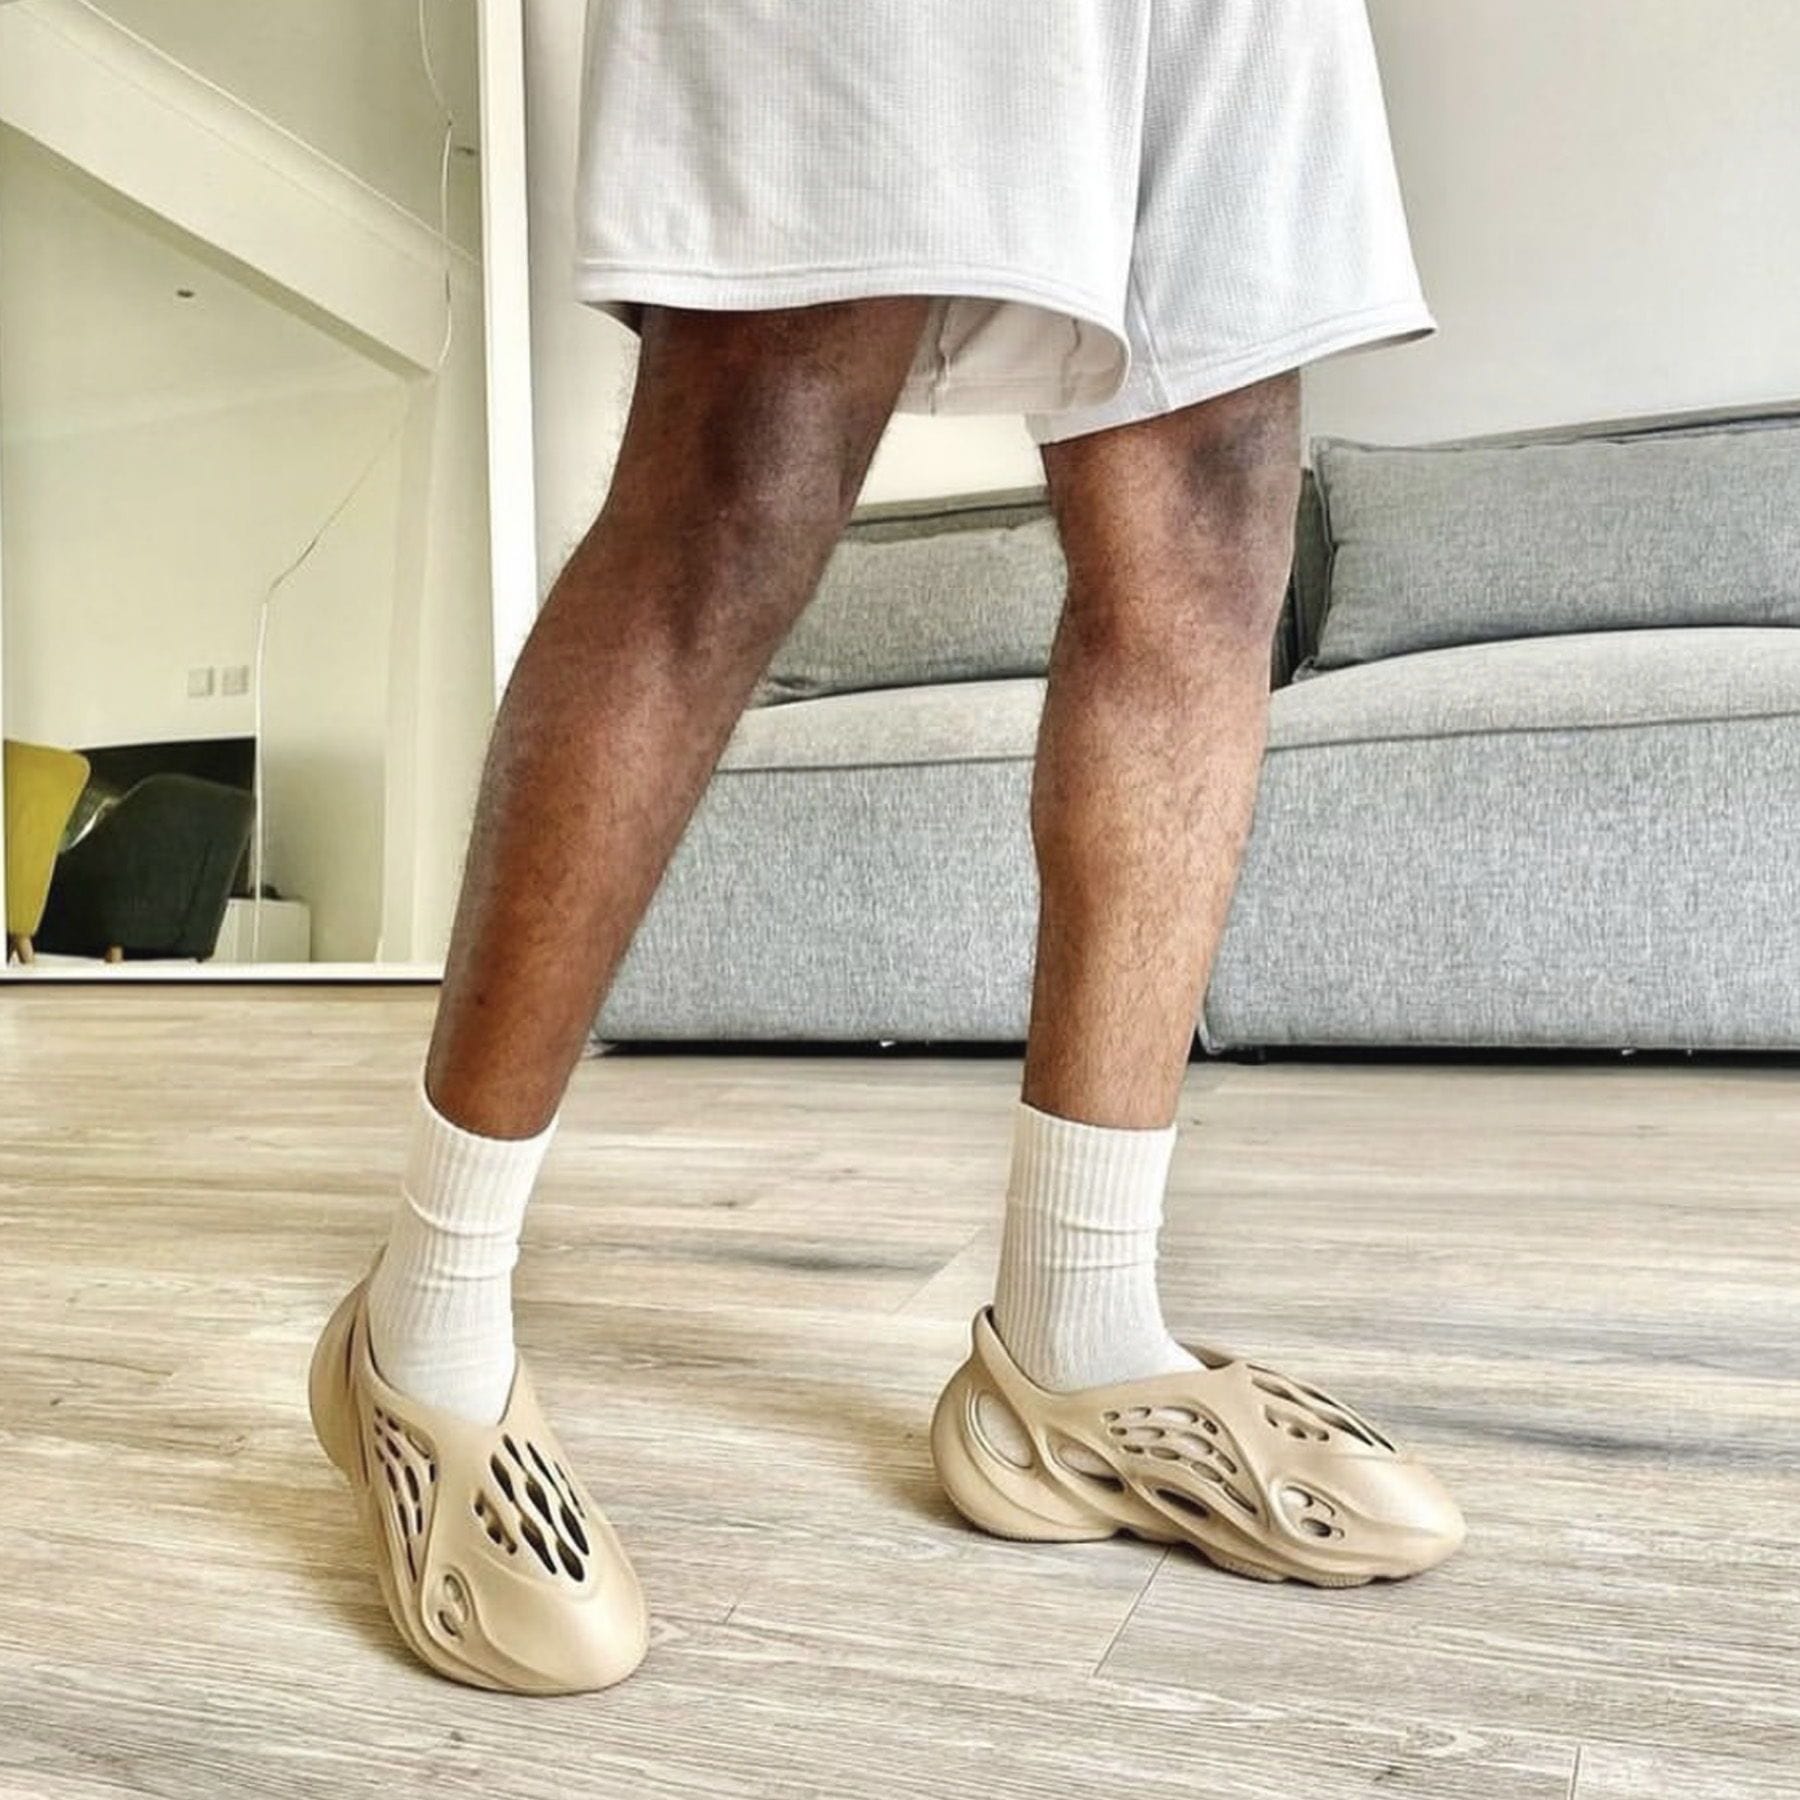 Adidas Yeezy Foam Runner 'Ochre' - Dubai Mad Kicks